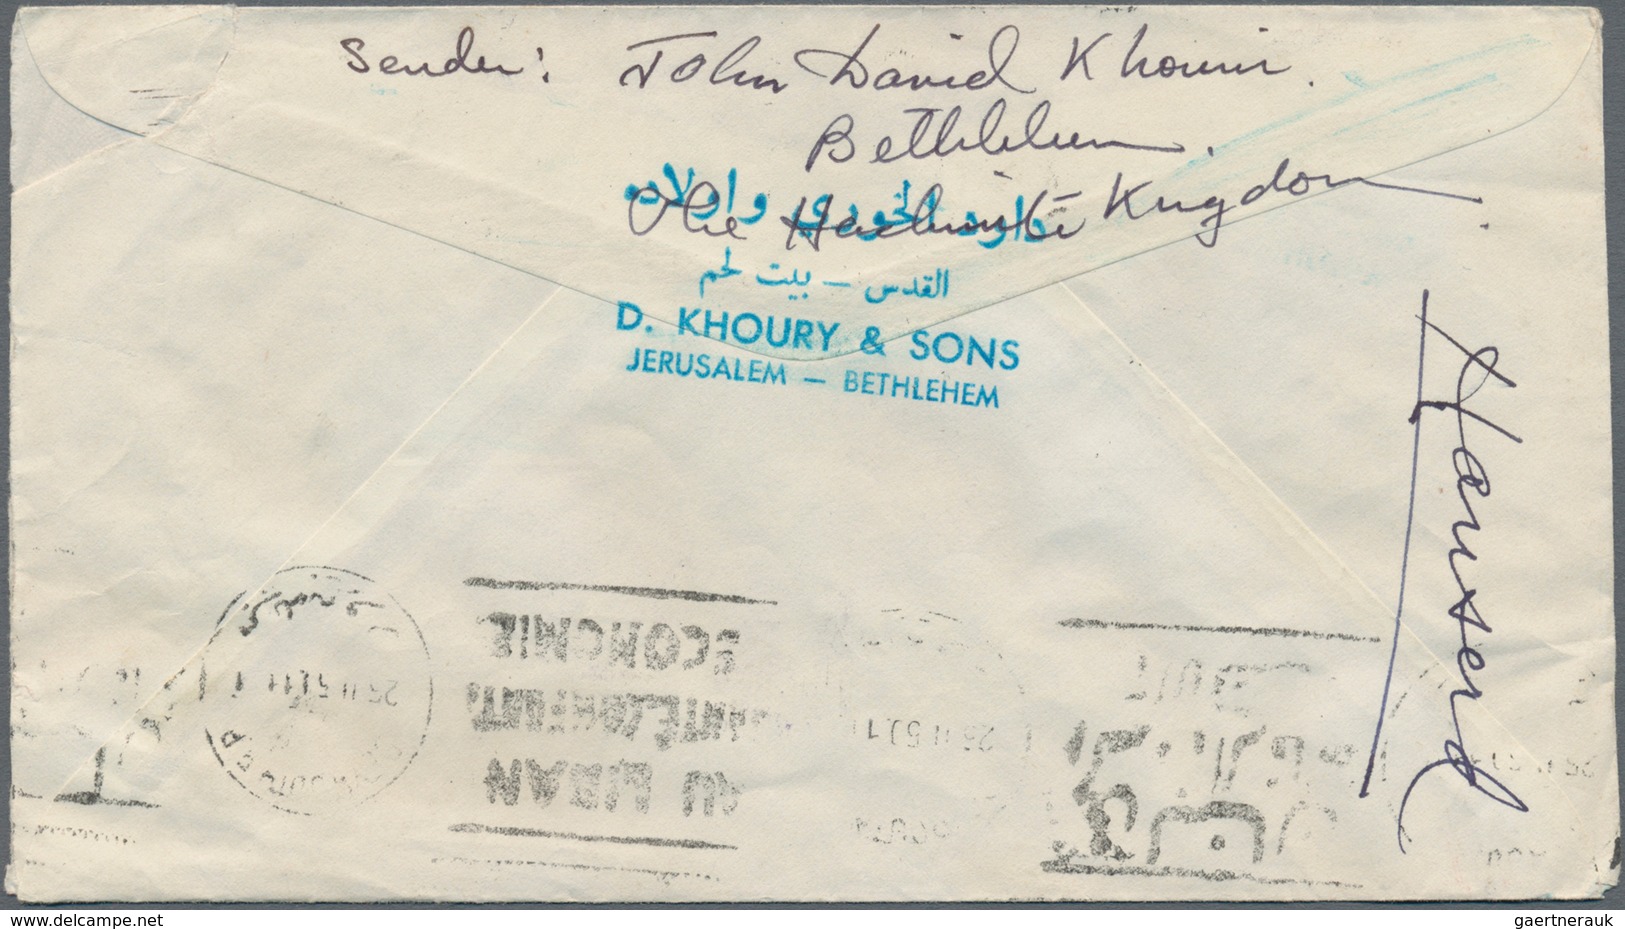 Jordanische Besetzung Palästina: 1950, correspondence of covers (10, 9 by airmail) from "BETHLEHEM"